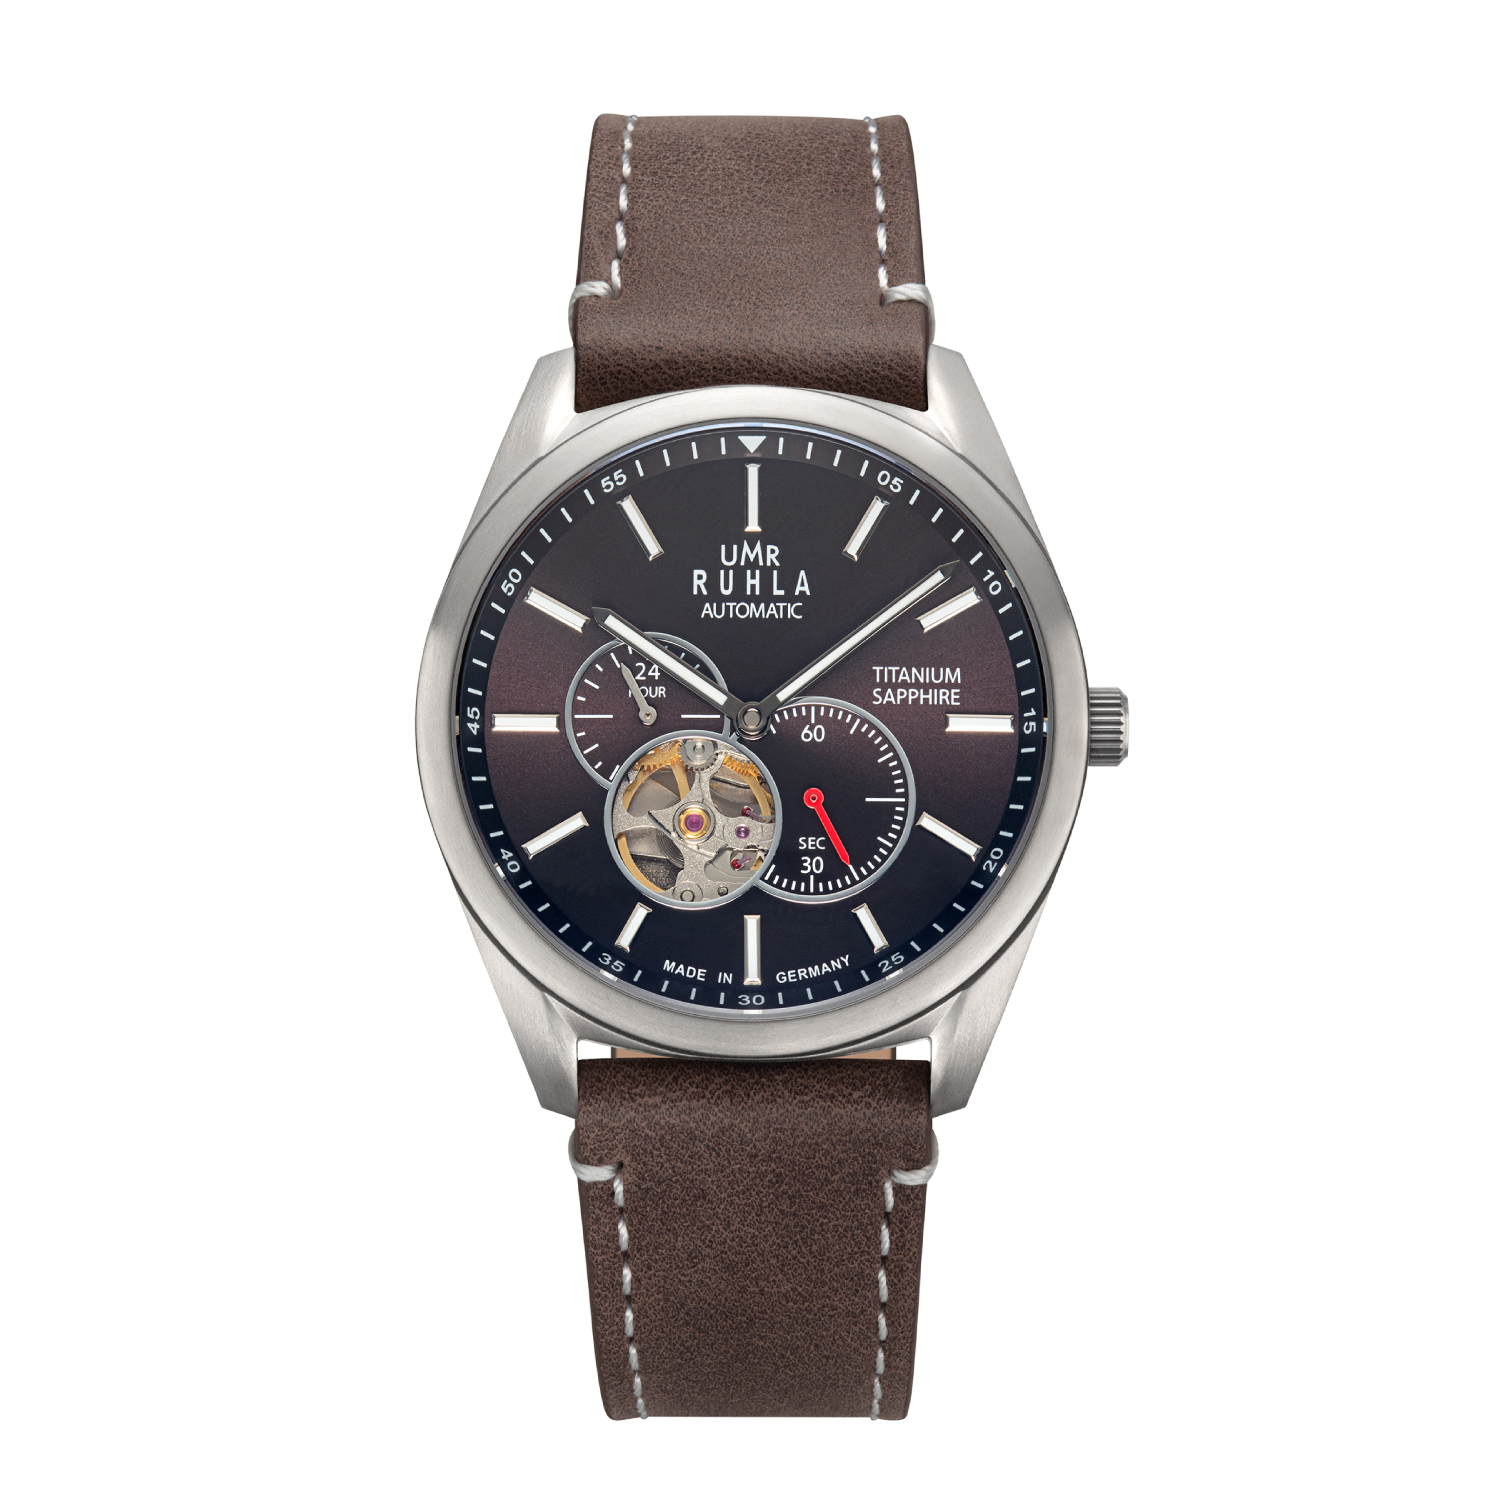 Uhren Manufaktur Ruhla - Automatik-Armbanduhr - Lederband braun